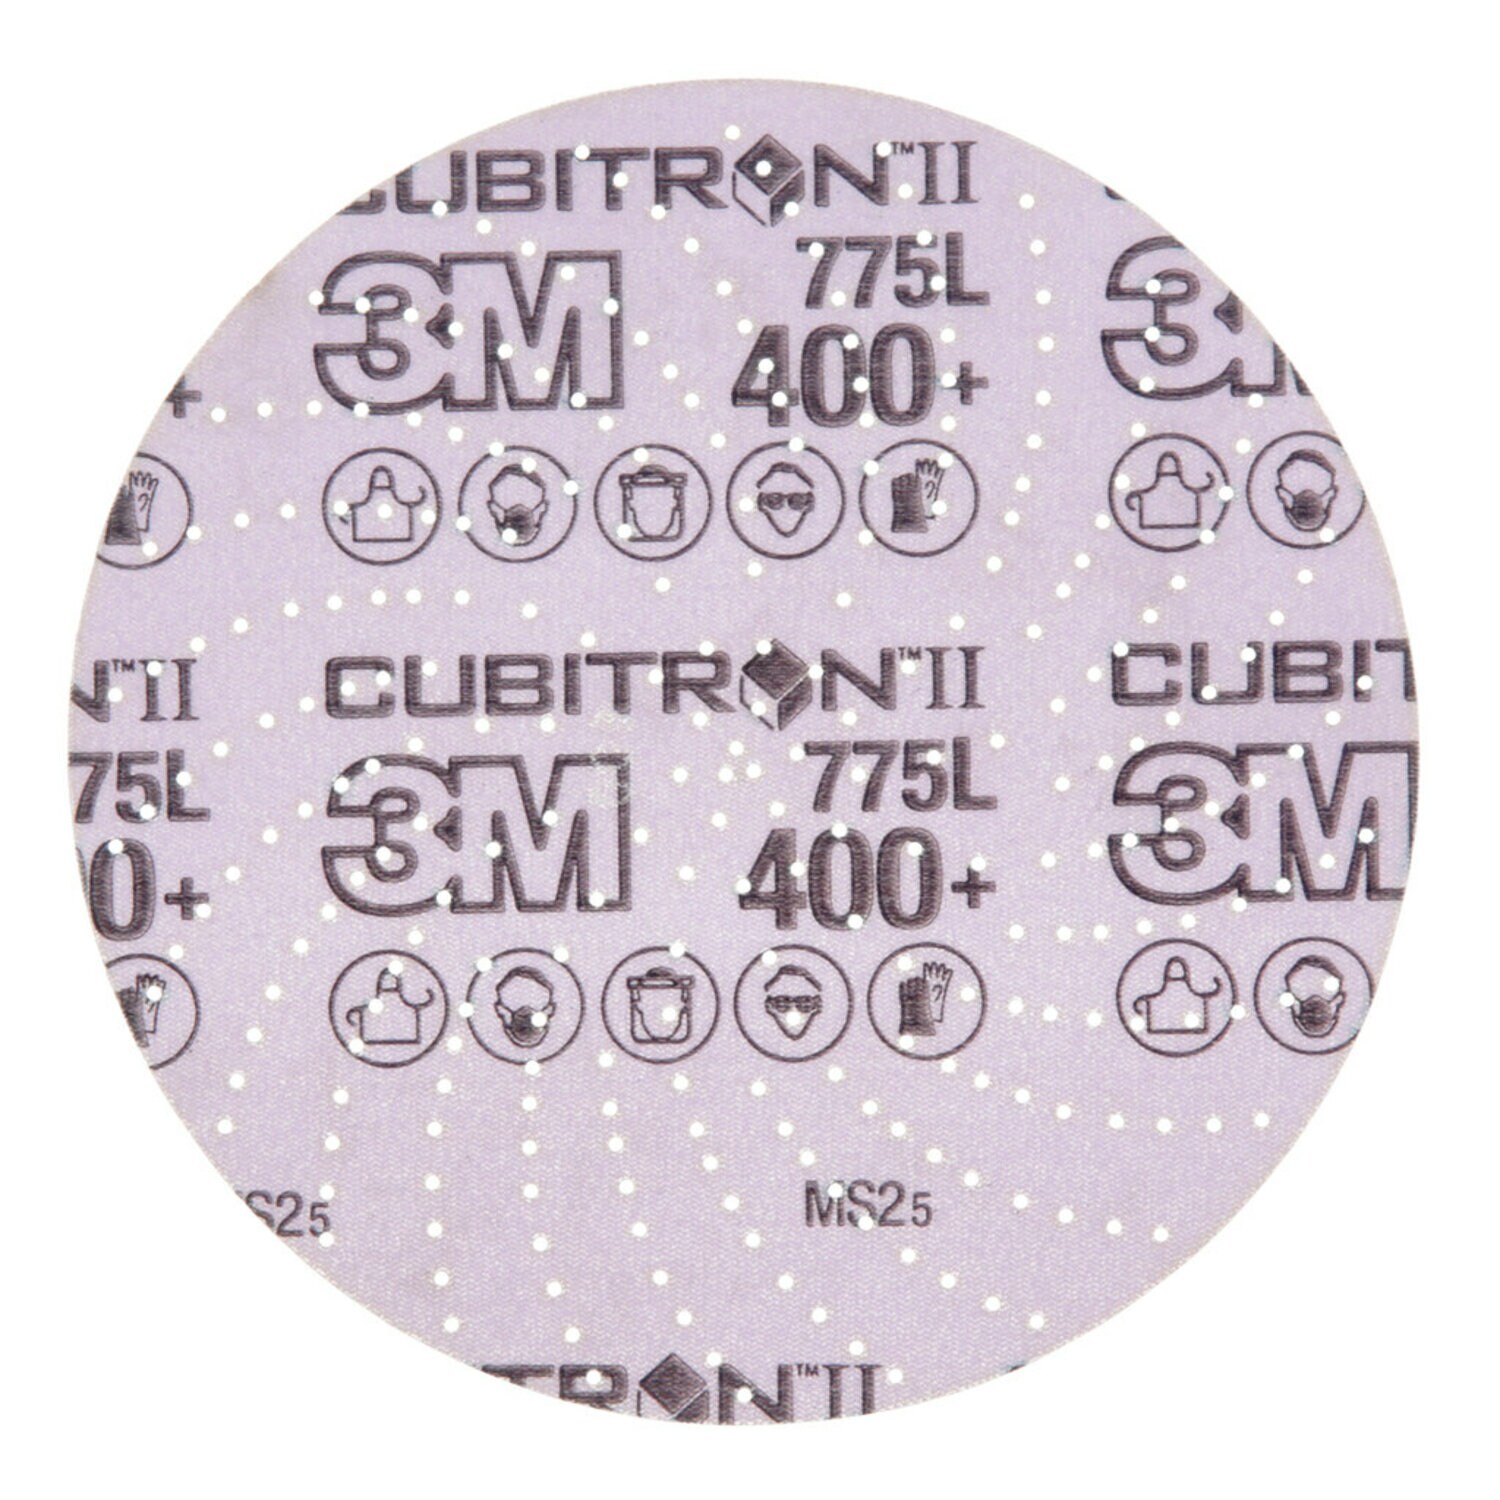 7100145455 - 3M Xtract Cubitron II Film Disc 775L, 400+, 6 in, Die 600LG,
50/Carton, 250 ea/Case